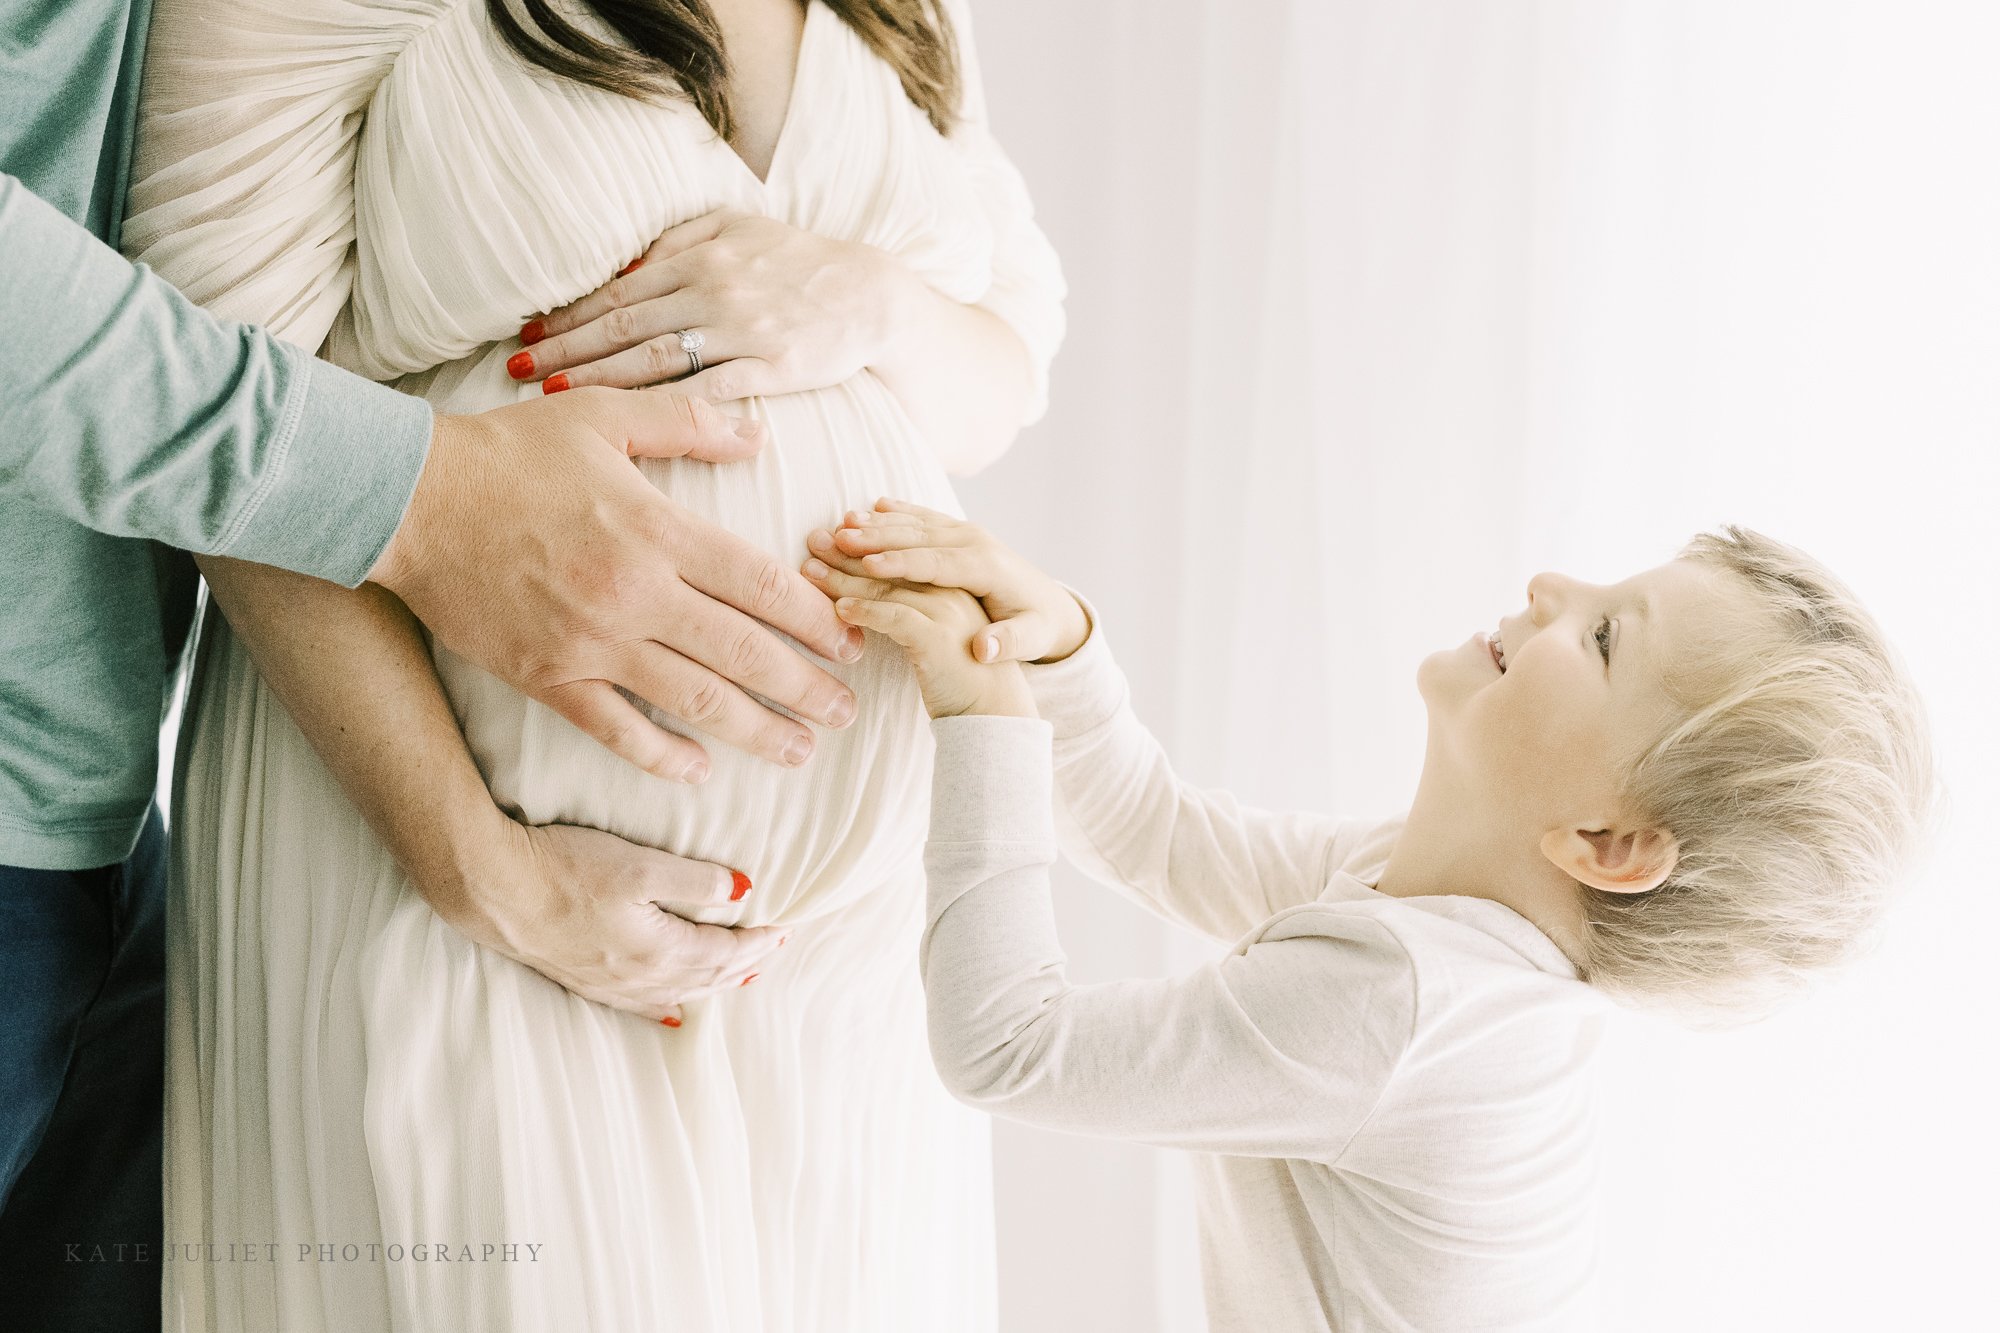 kate-juliet-photography-2022-maternity-web-57.jpg